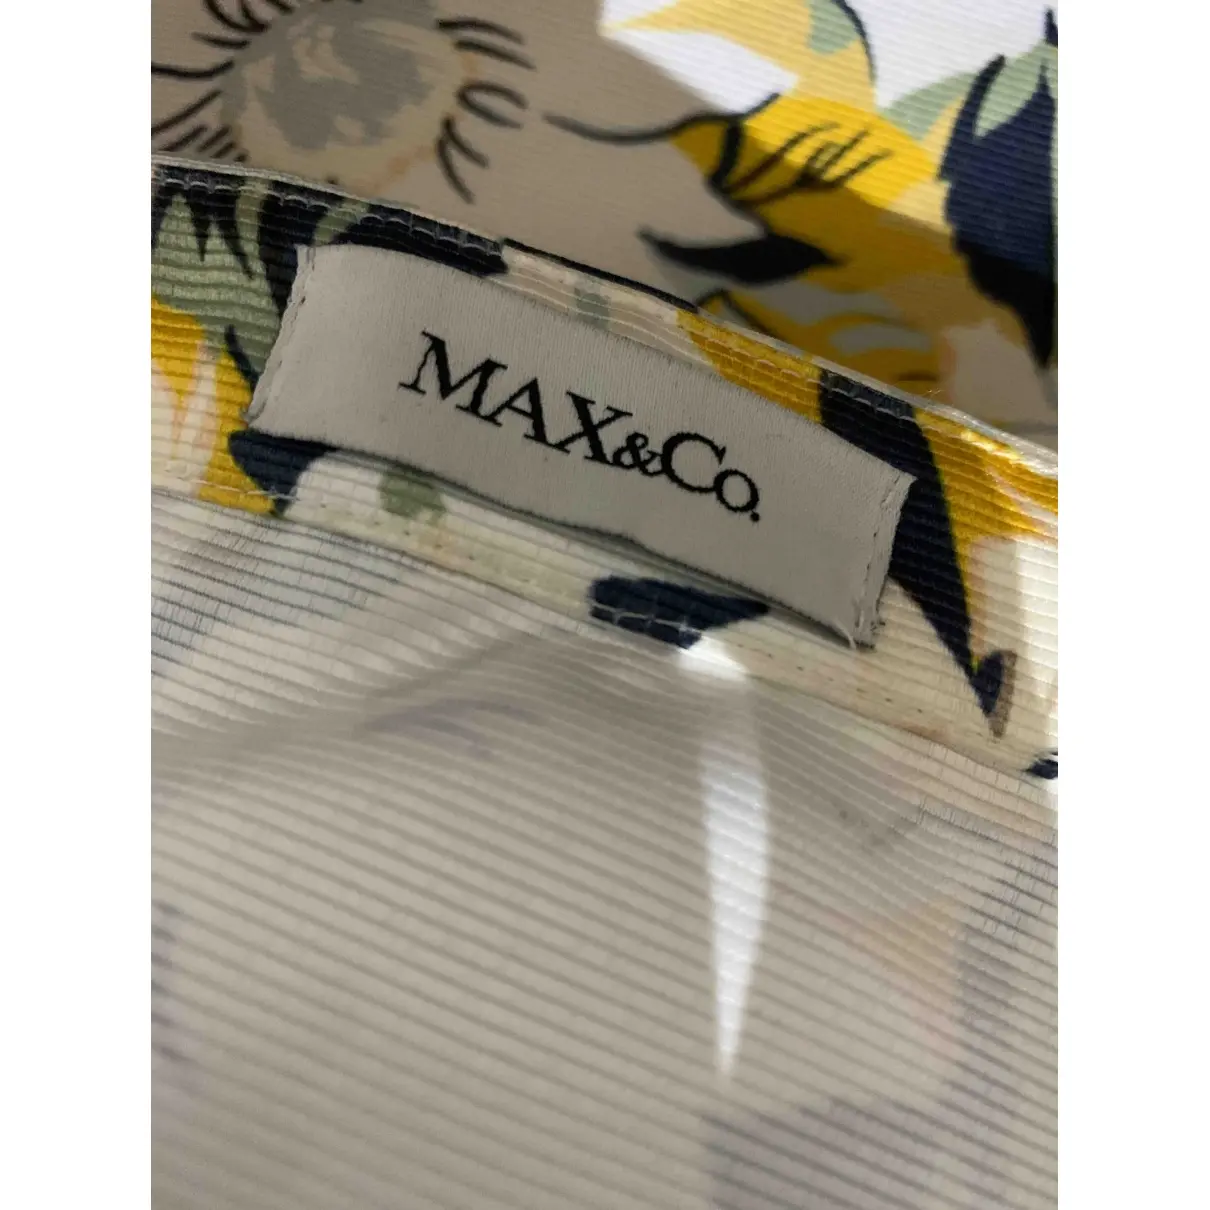 Luxury Max & Co Skirts Women